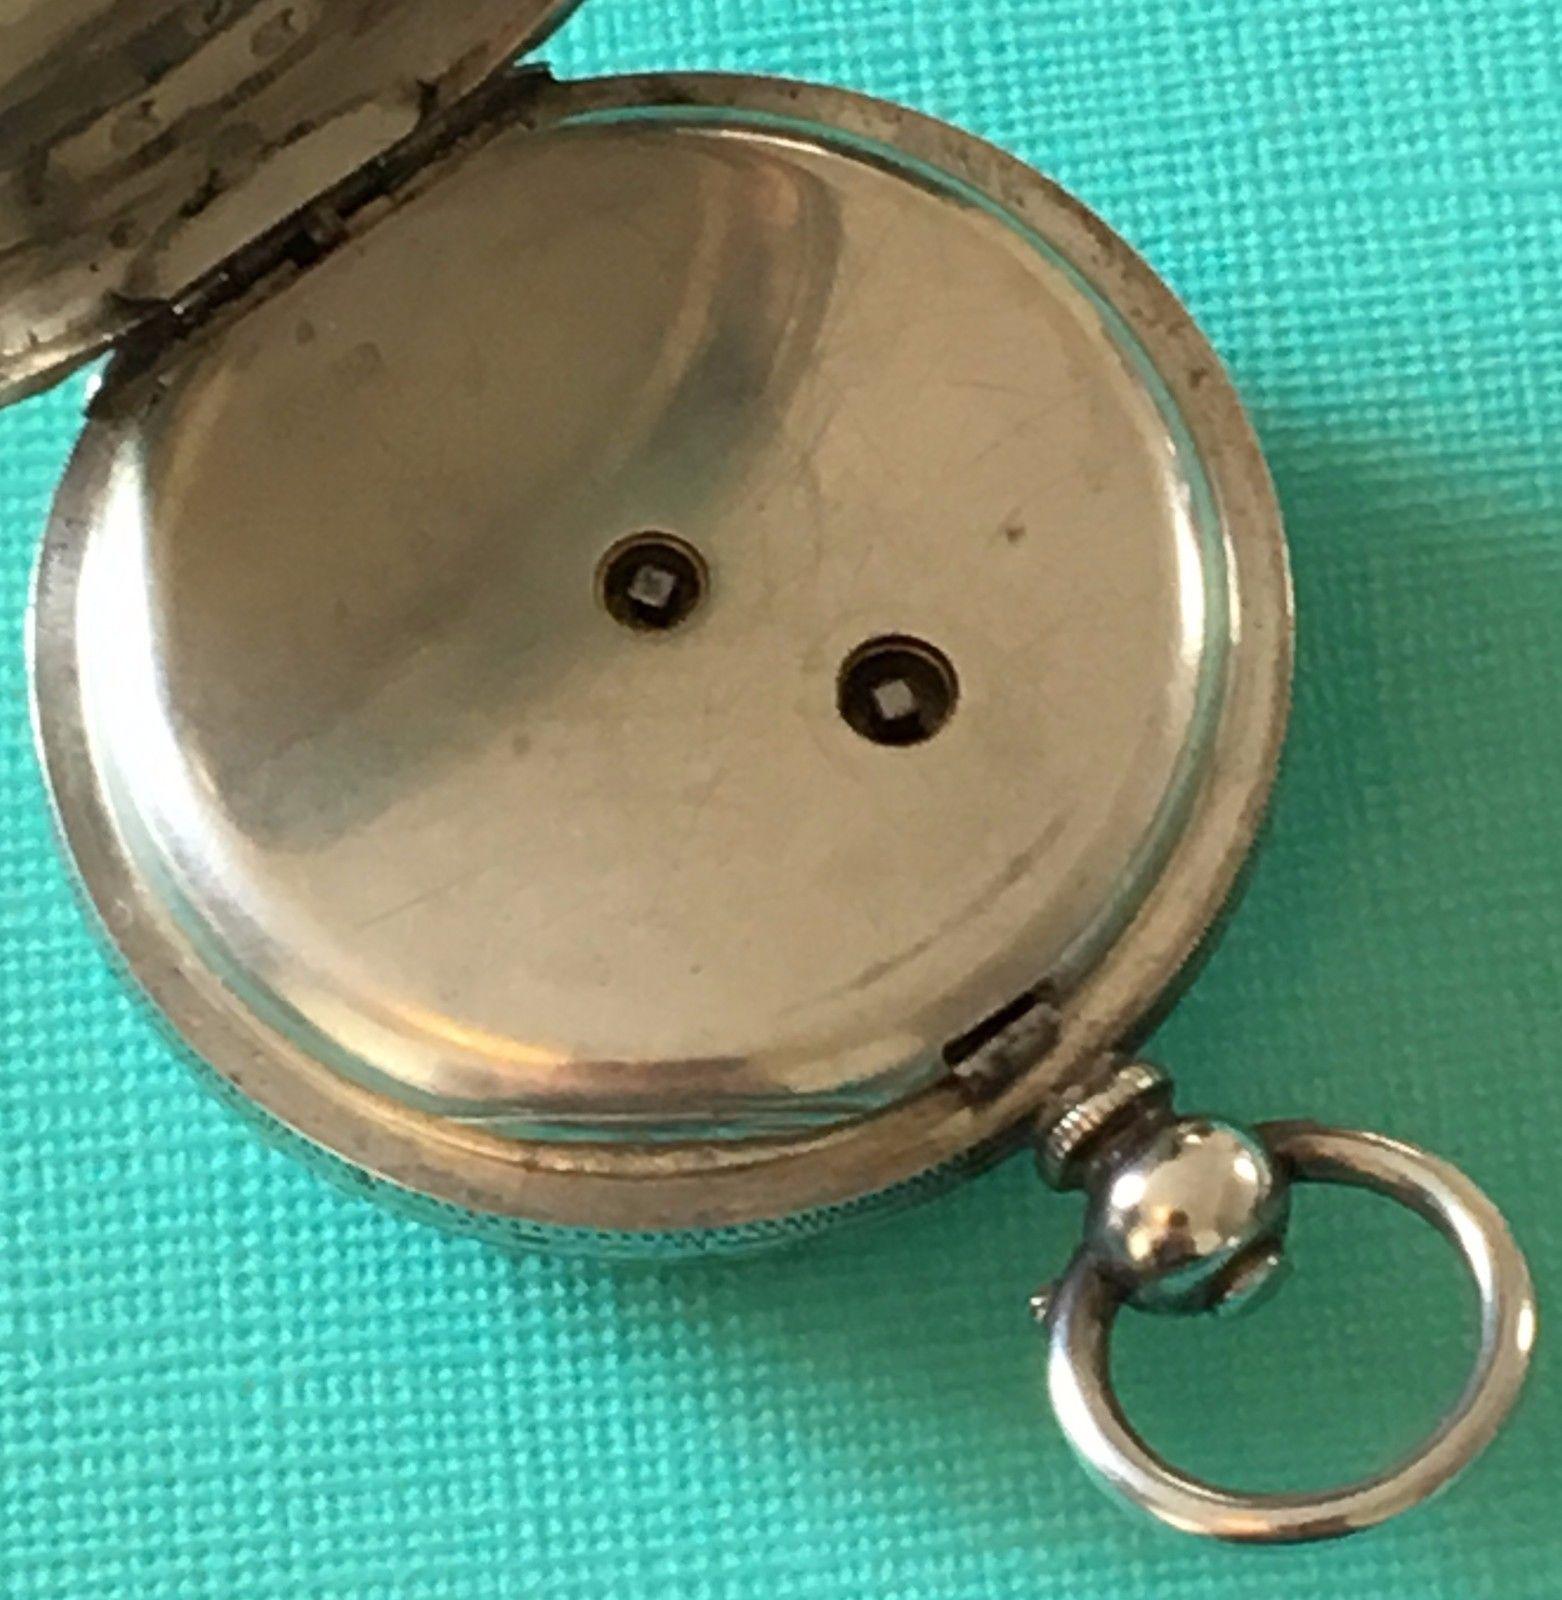 antique sterling silver pocket watch